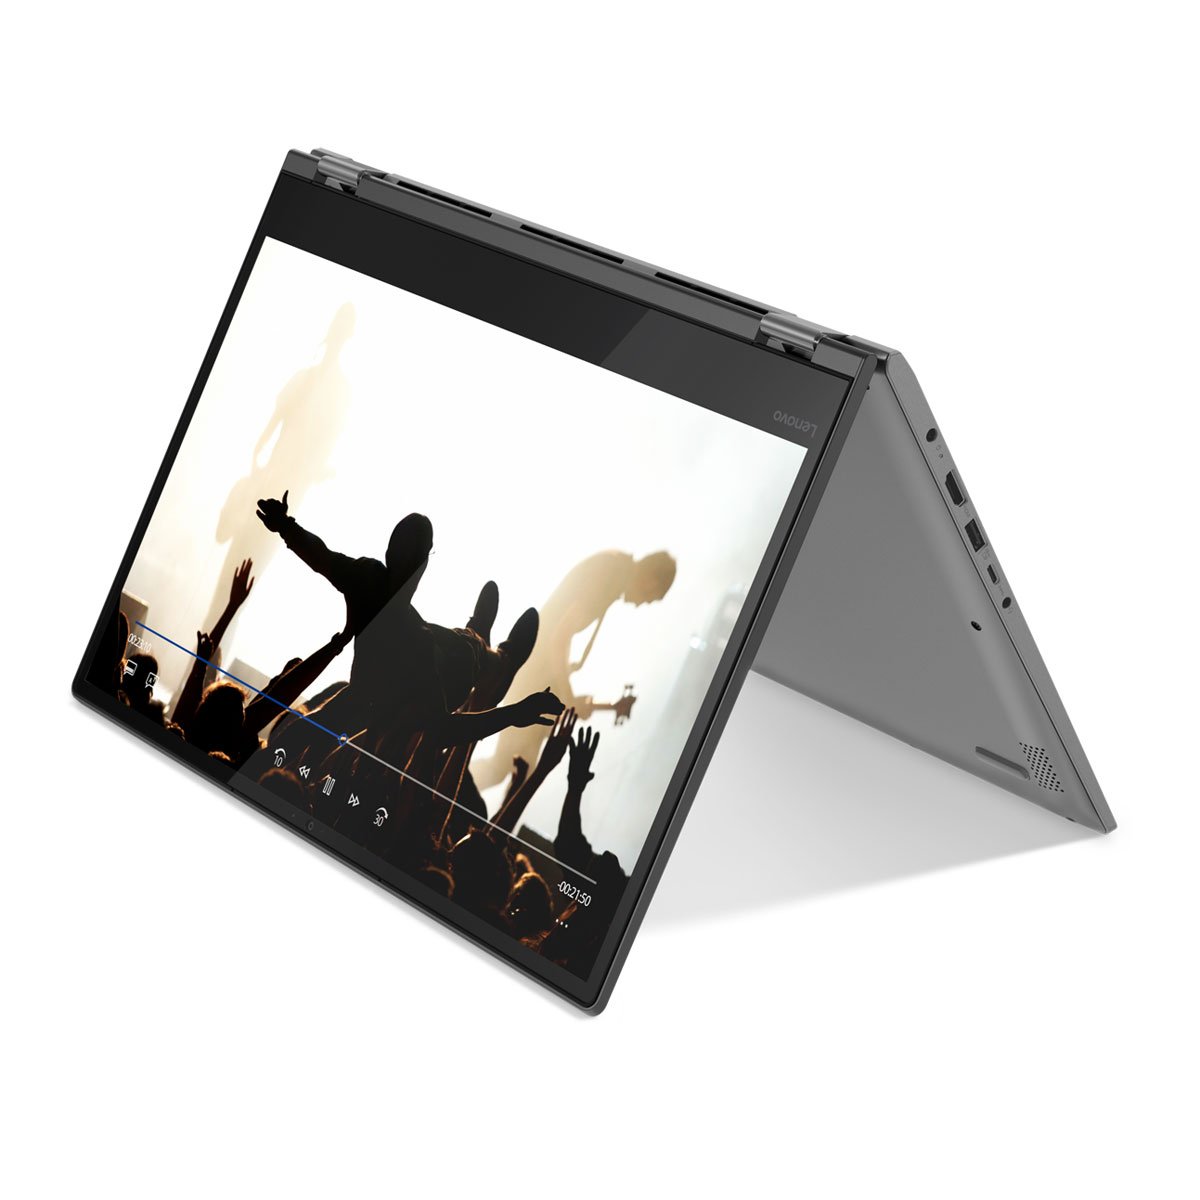 Laptop 2 en 1 Yoga 530-14Arr5 Lenovo